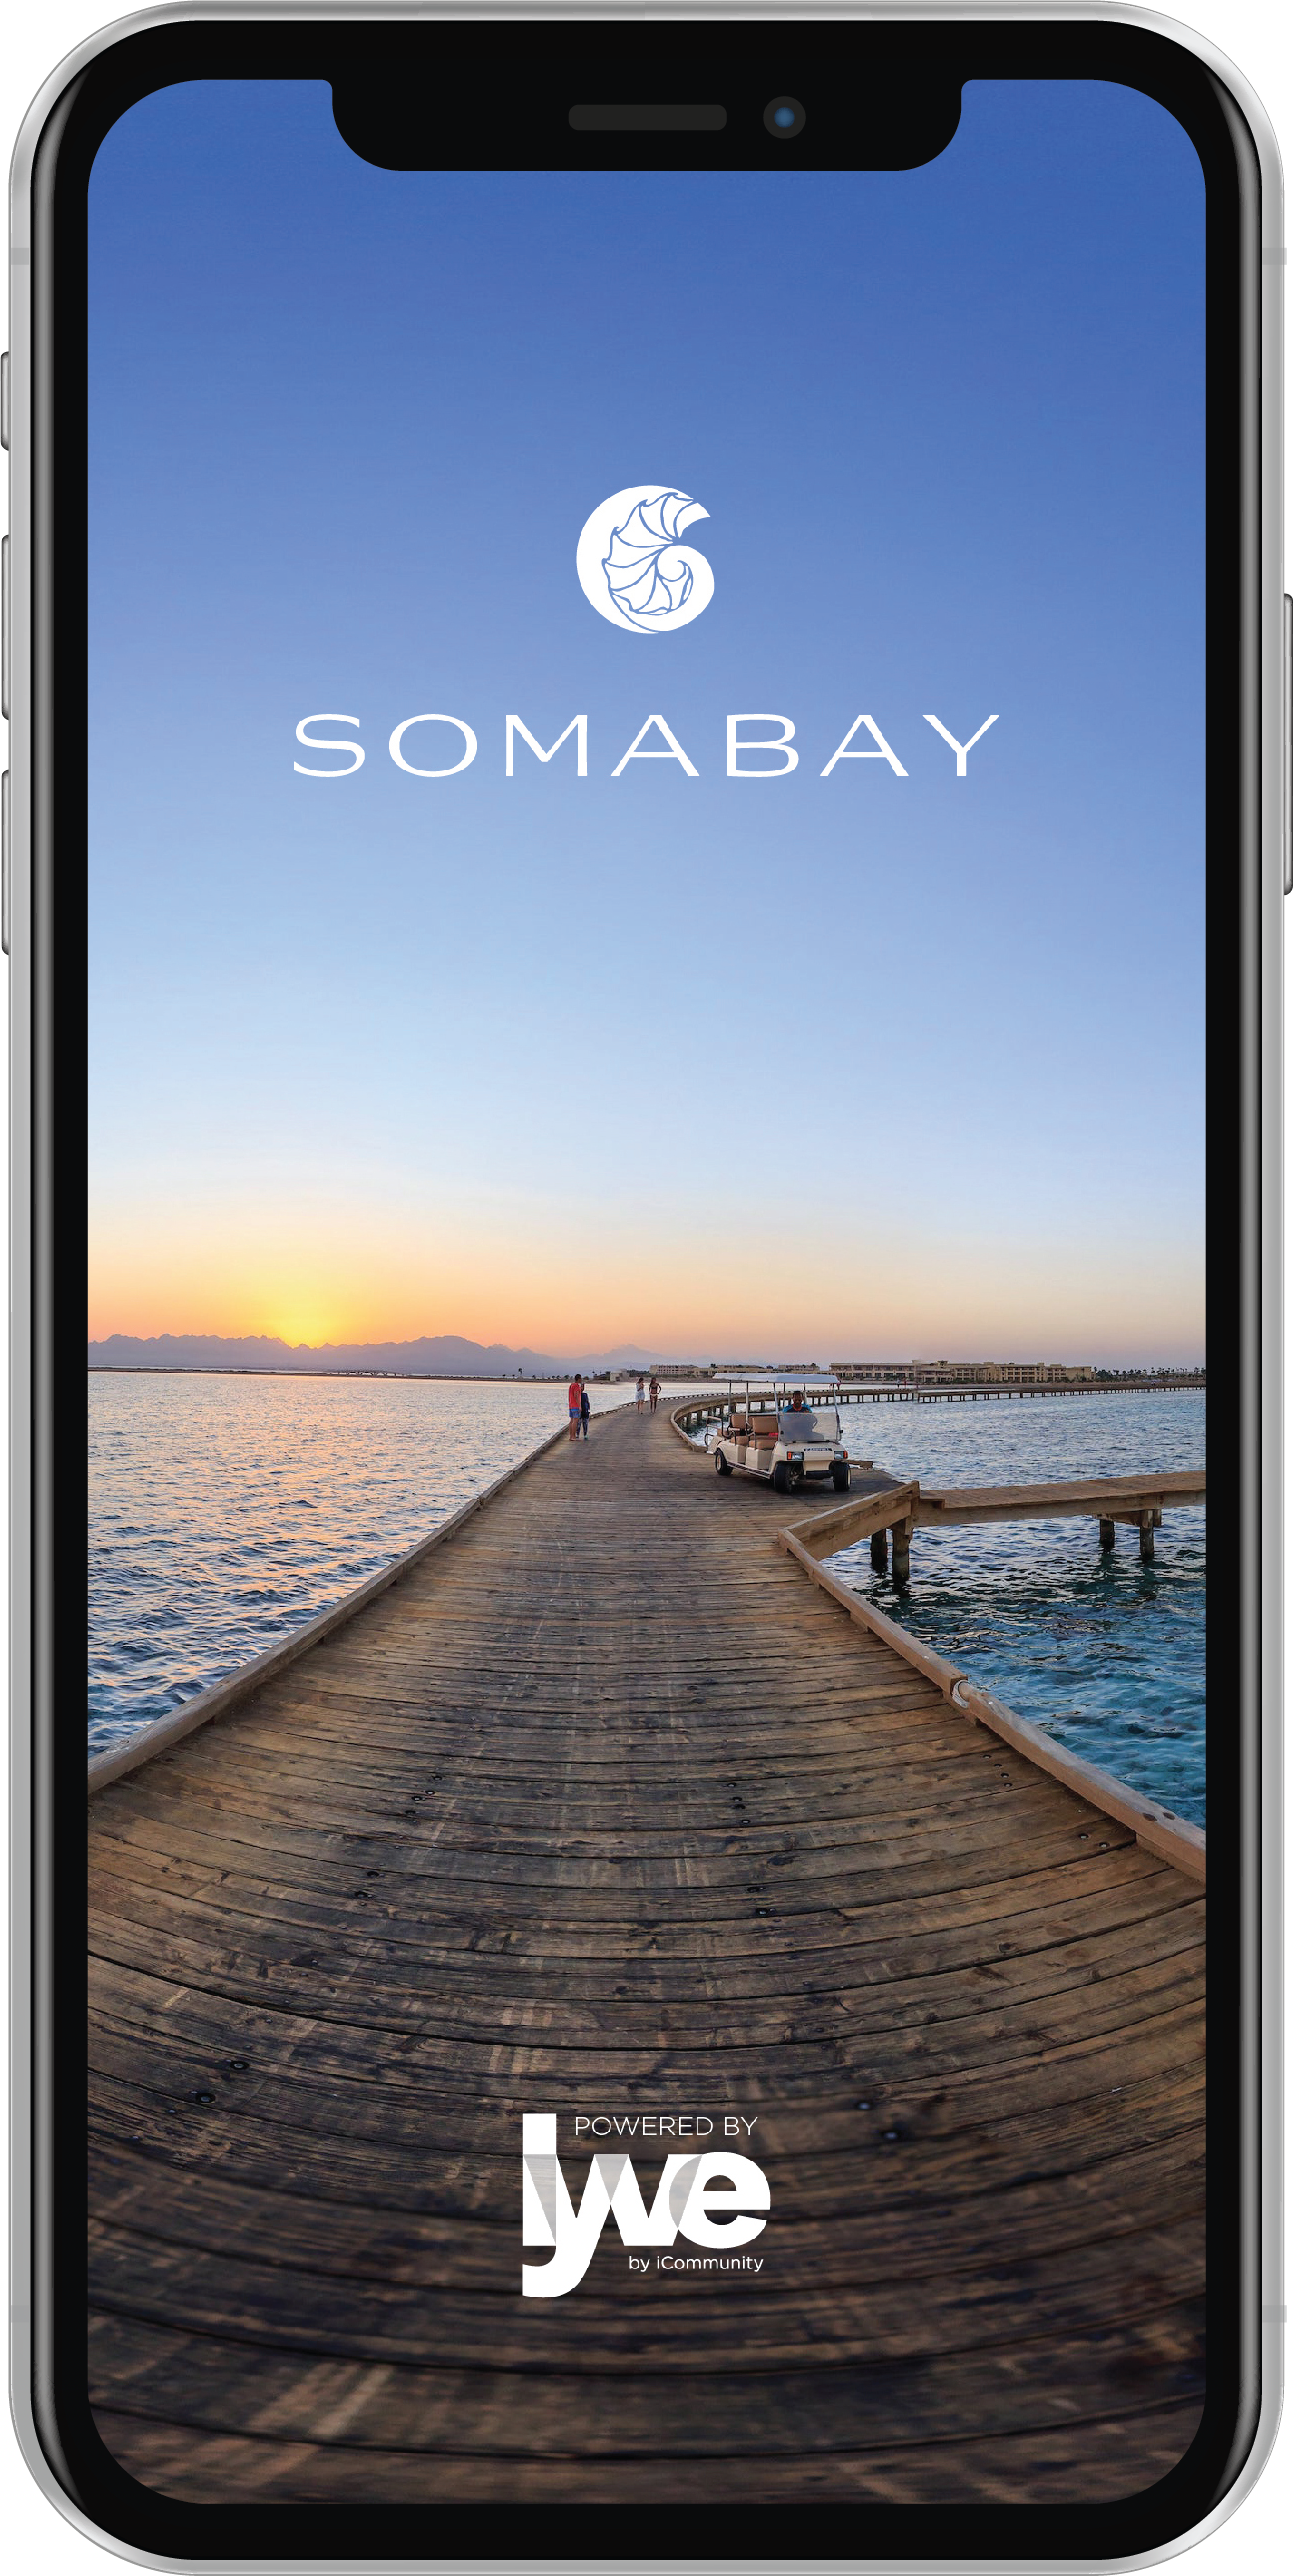 somabay-01